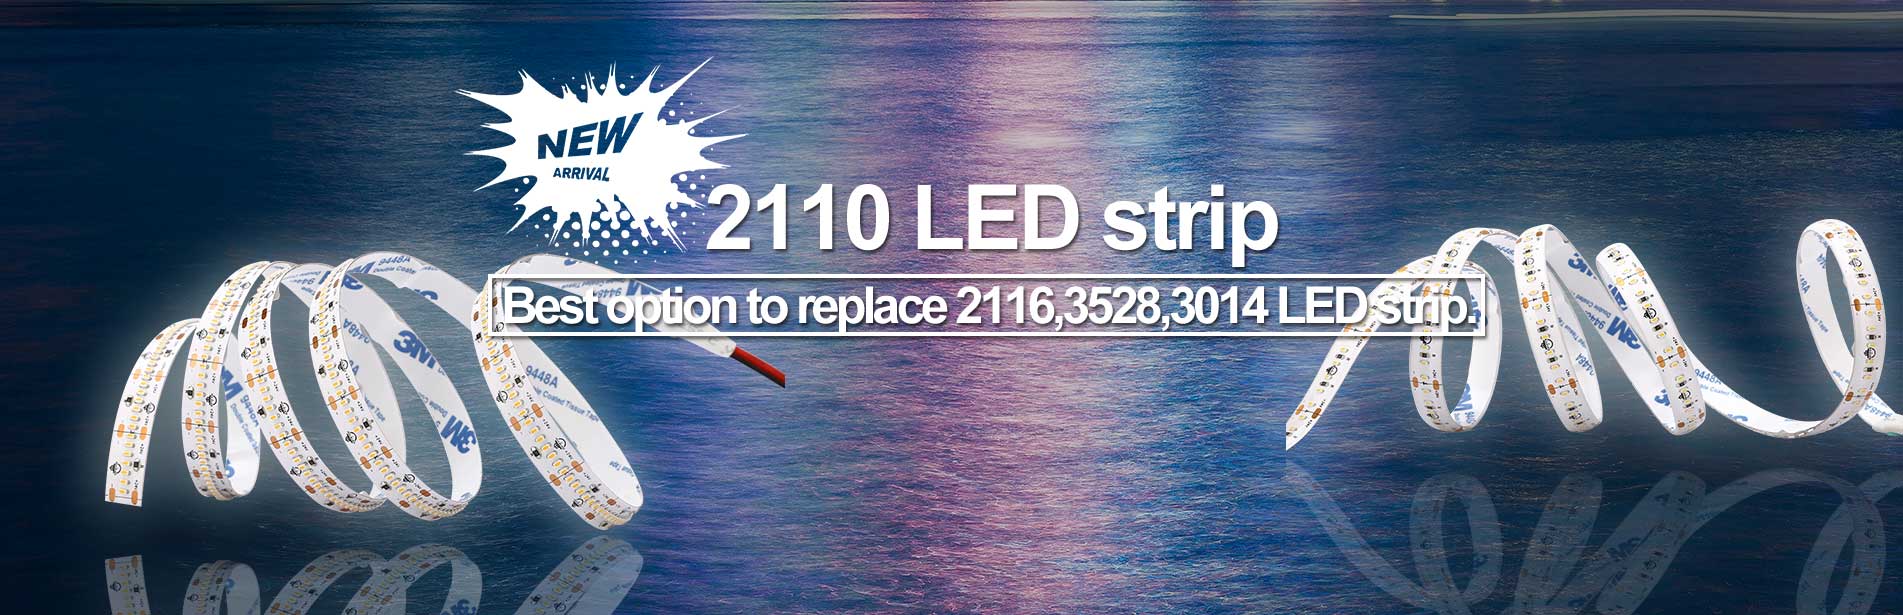 2110 led strip  